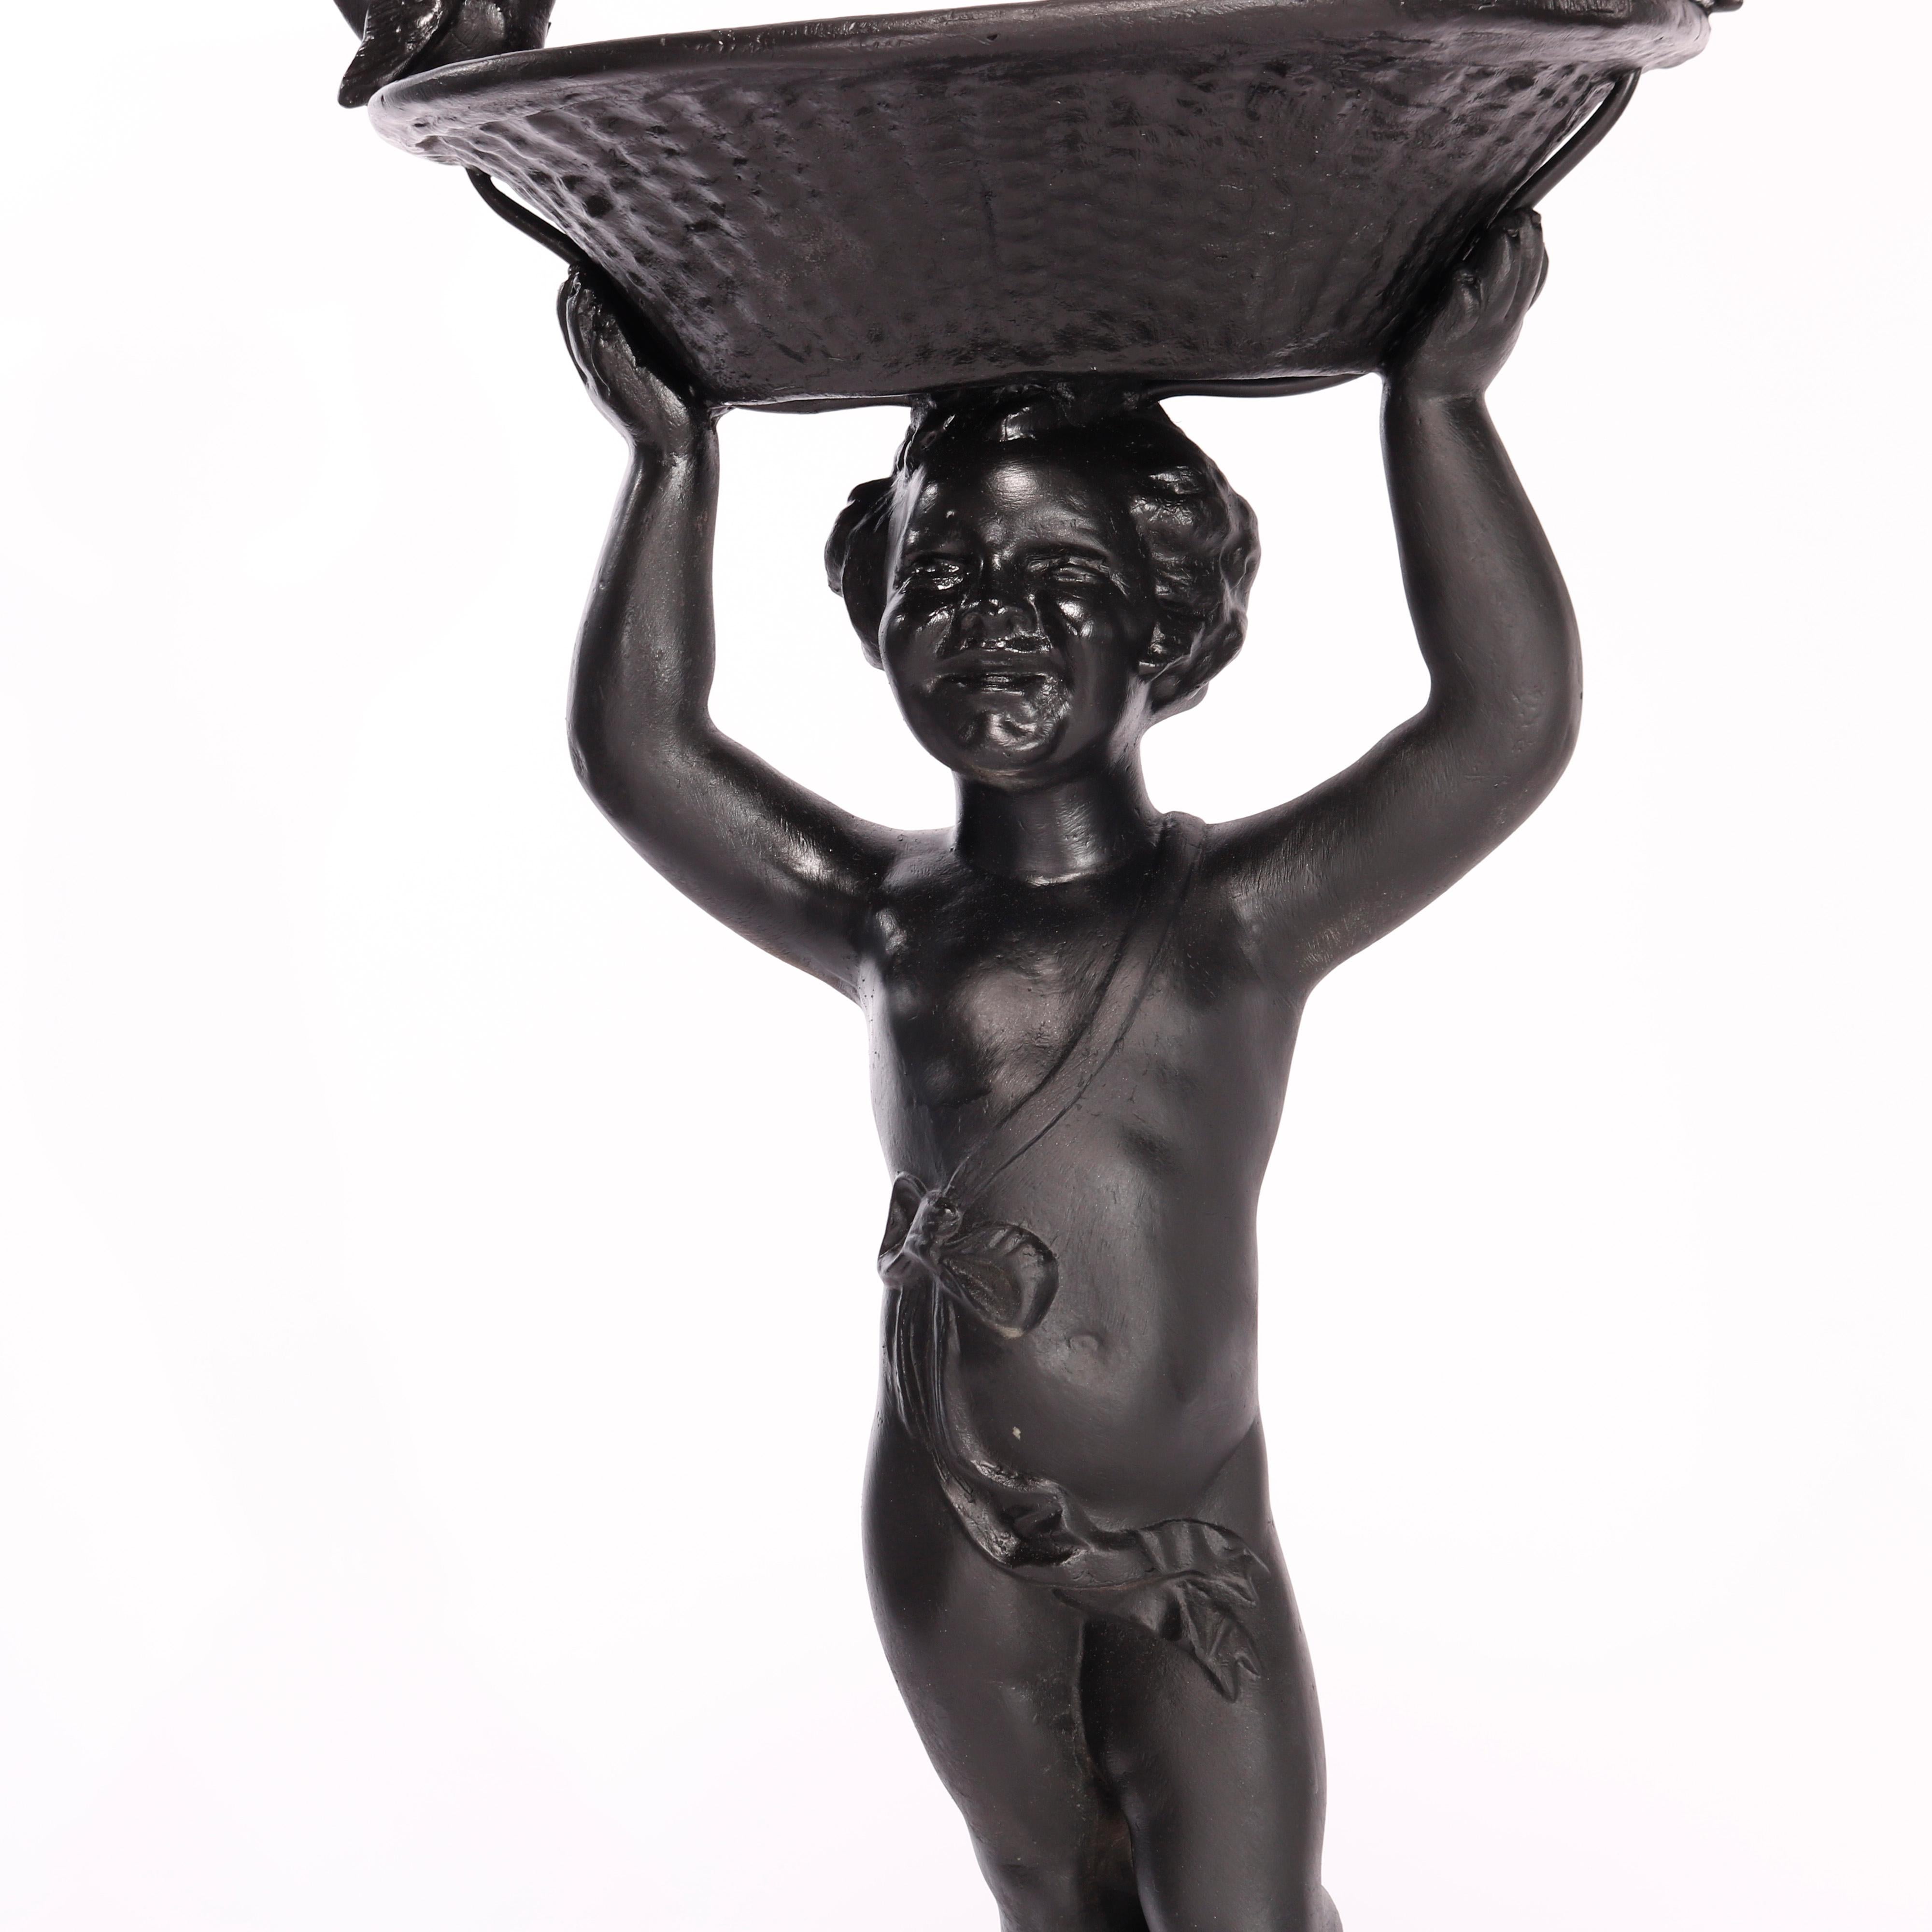 A Figural Cast Iron Classical Cherub Fountain or Planter, 20th century

Measures - 51.5